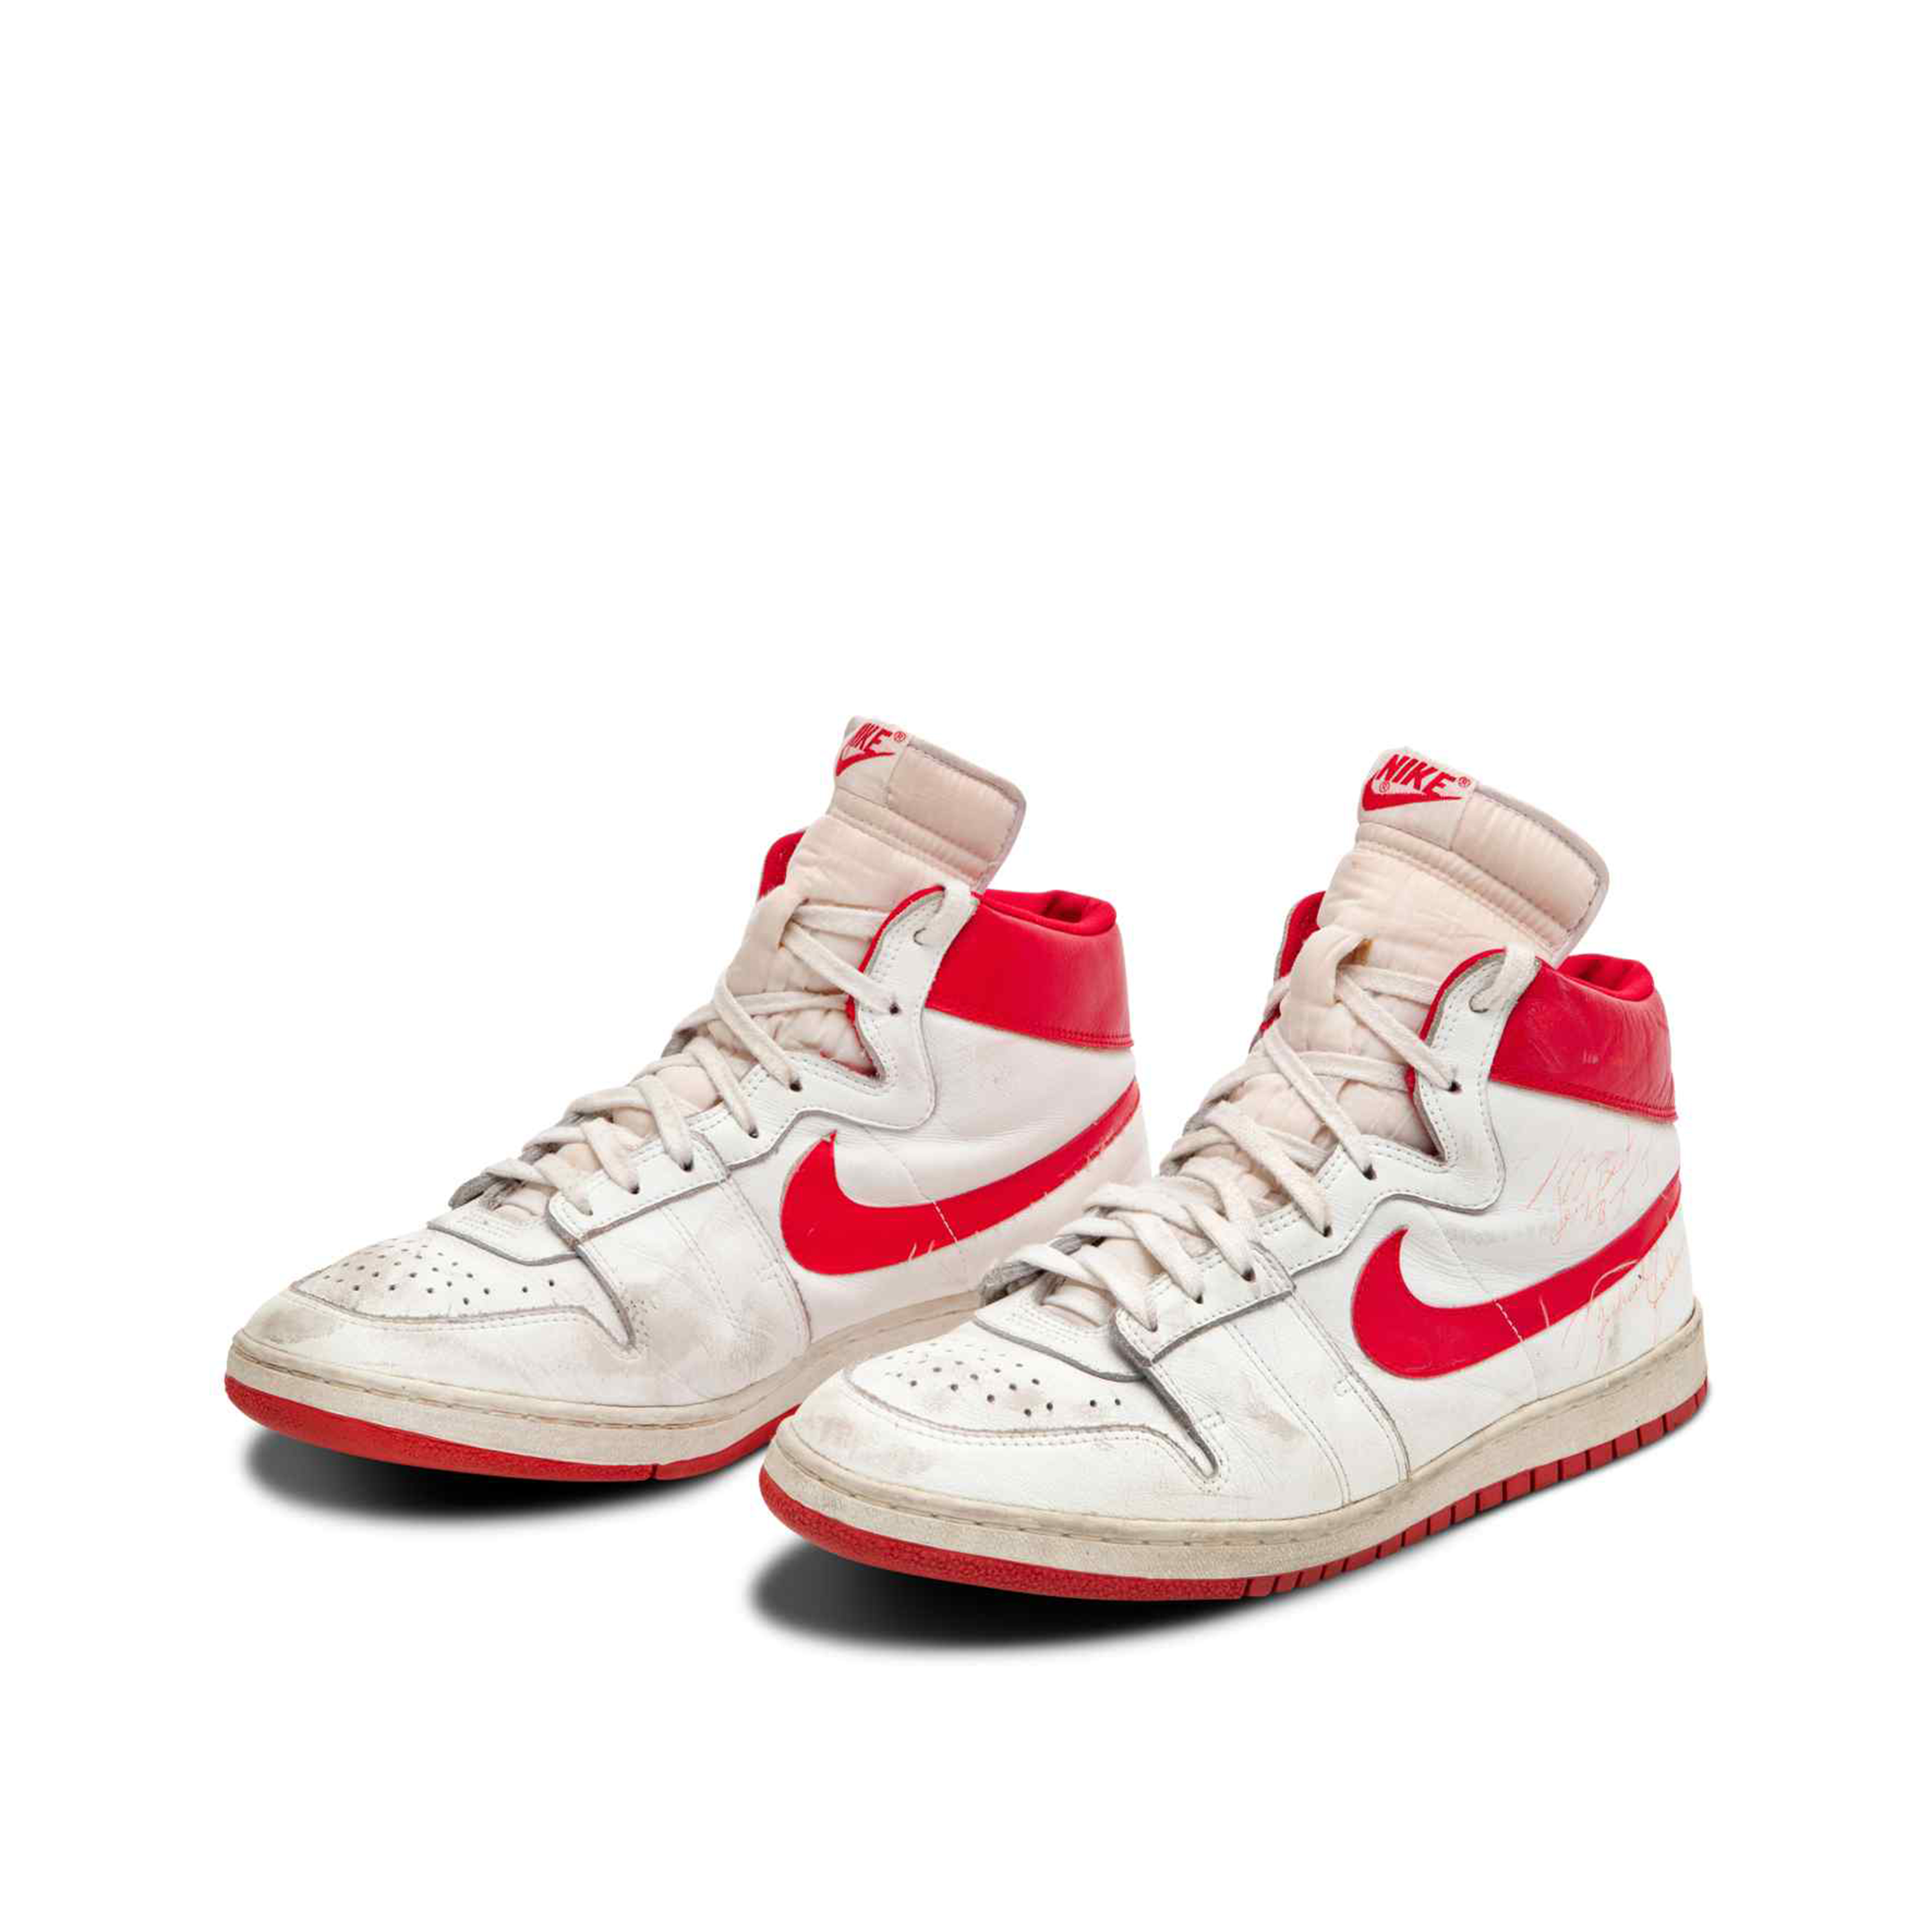 Michael Jordan Air Ship shoes from 1984